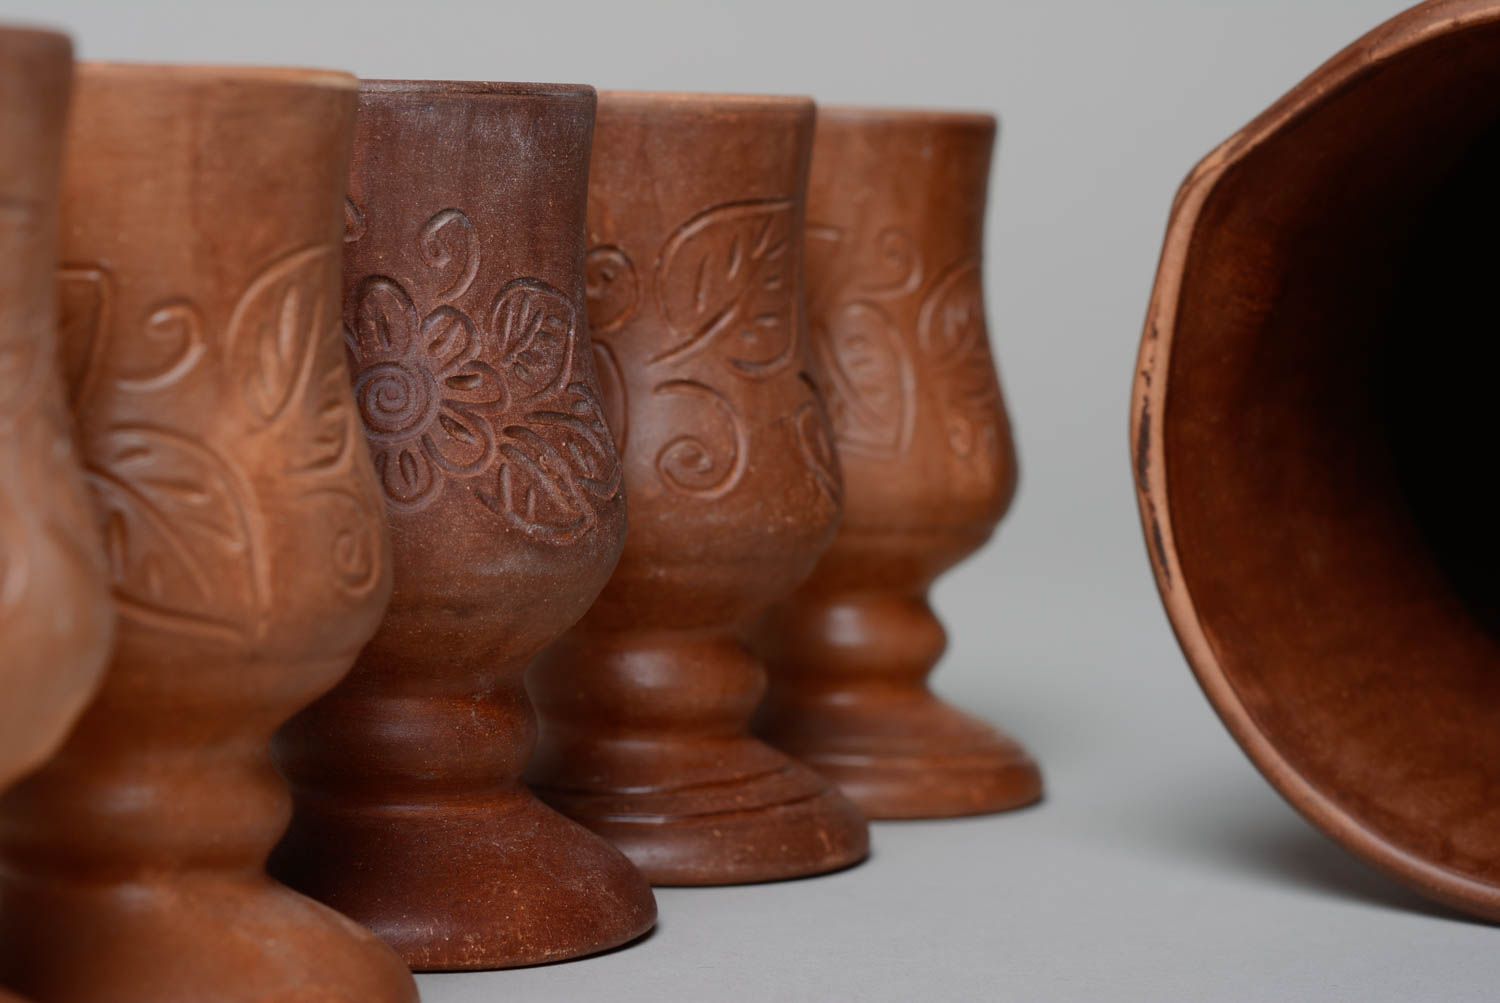 70 oz ceramic handmade terracotta wine pitcher with 6 wine goblets 3,8 lb photo 3